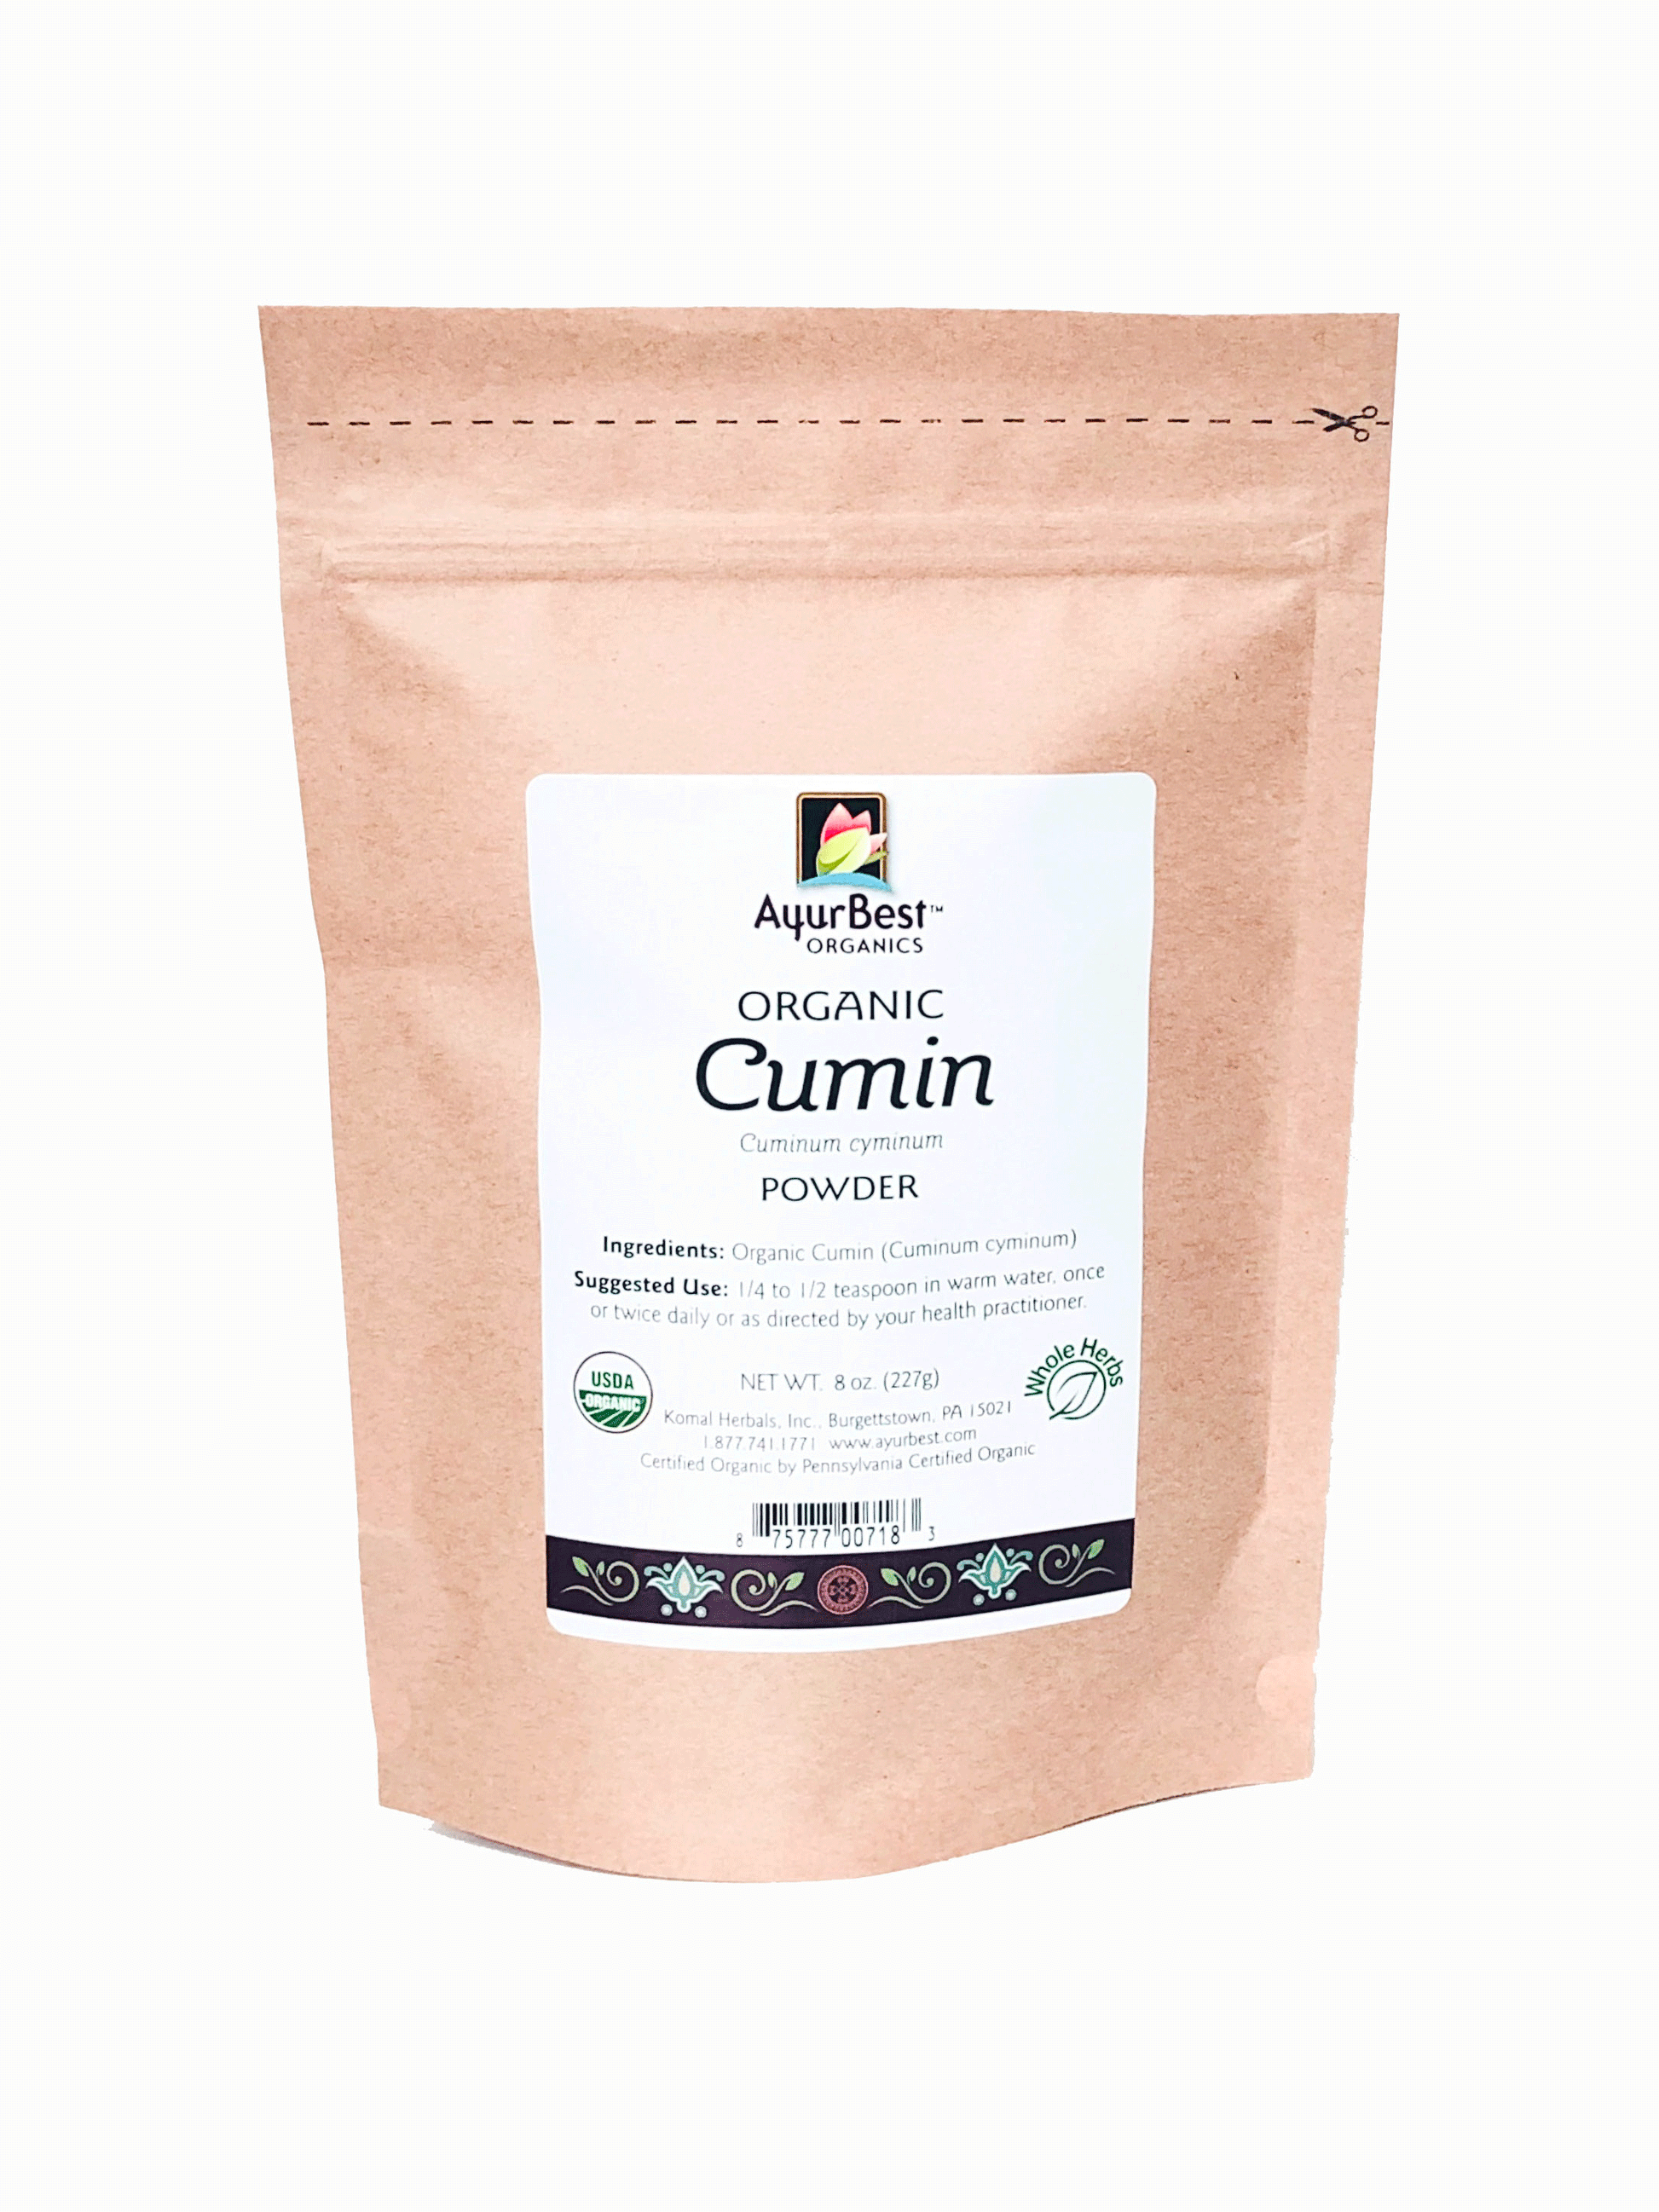 Buty Organic Cumin Seed Powder in 8oz size.